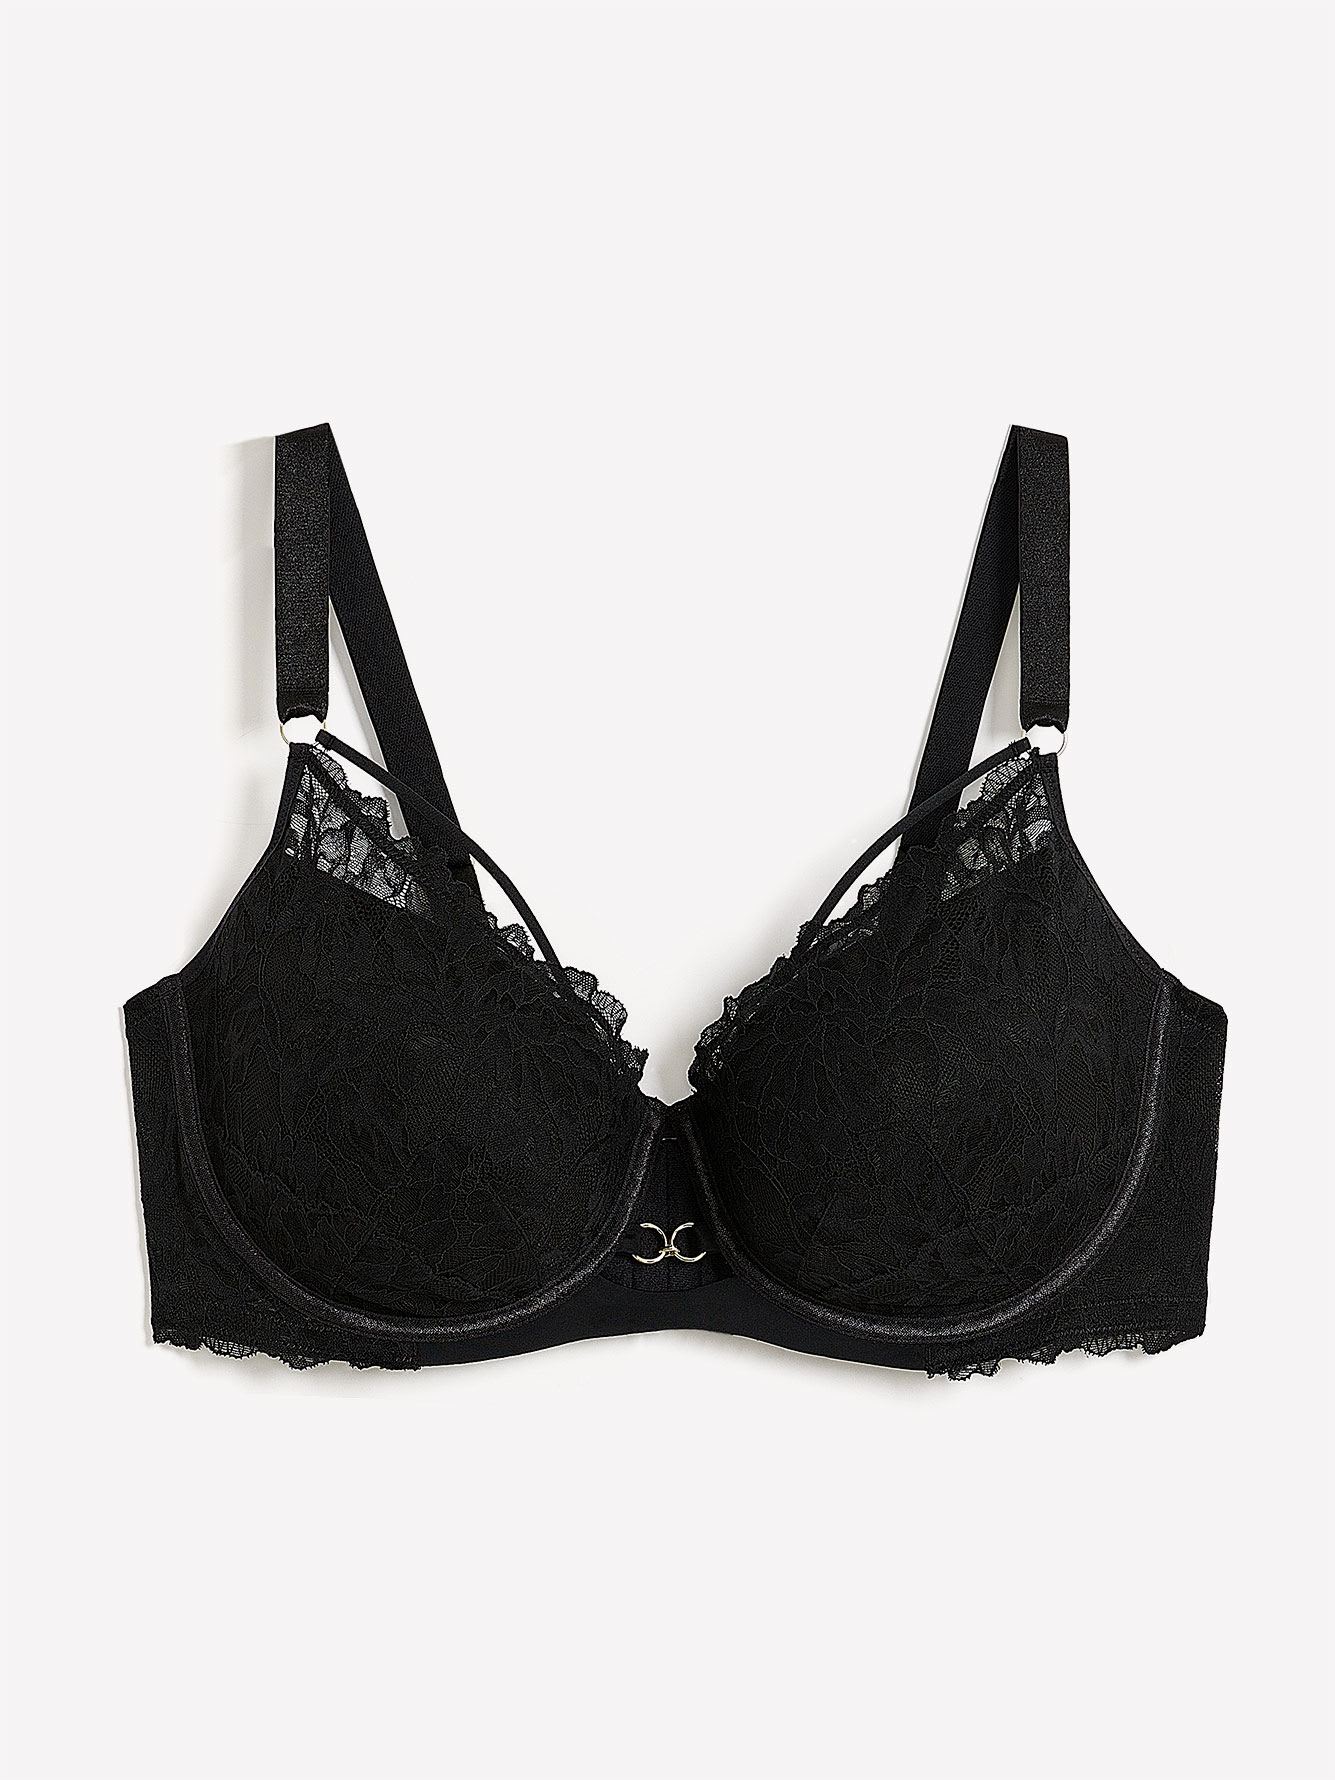 Sexy Black Lace Underwire Balconette Bra - Déesse Collection